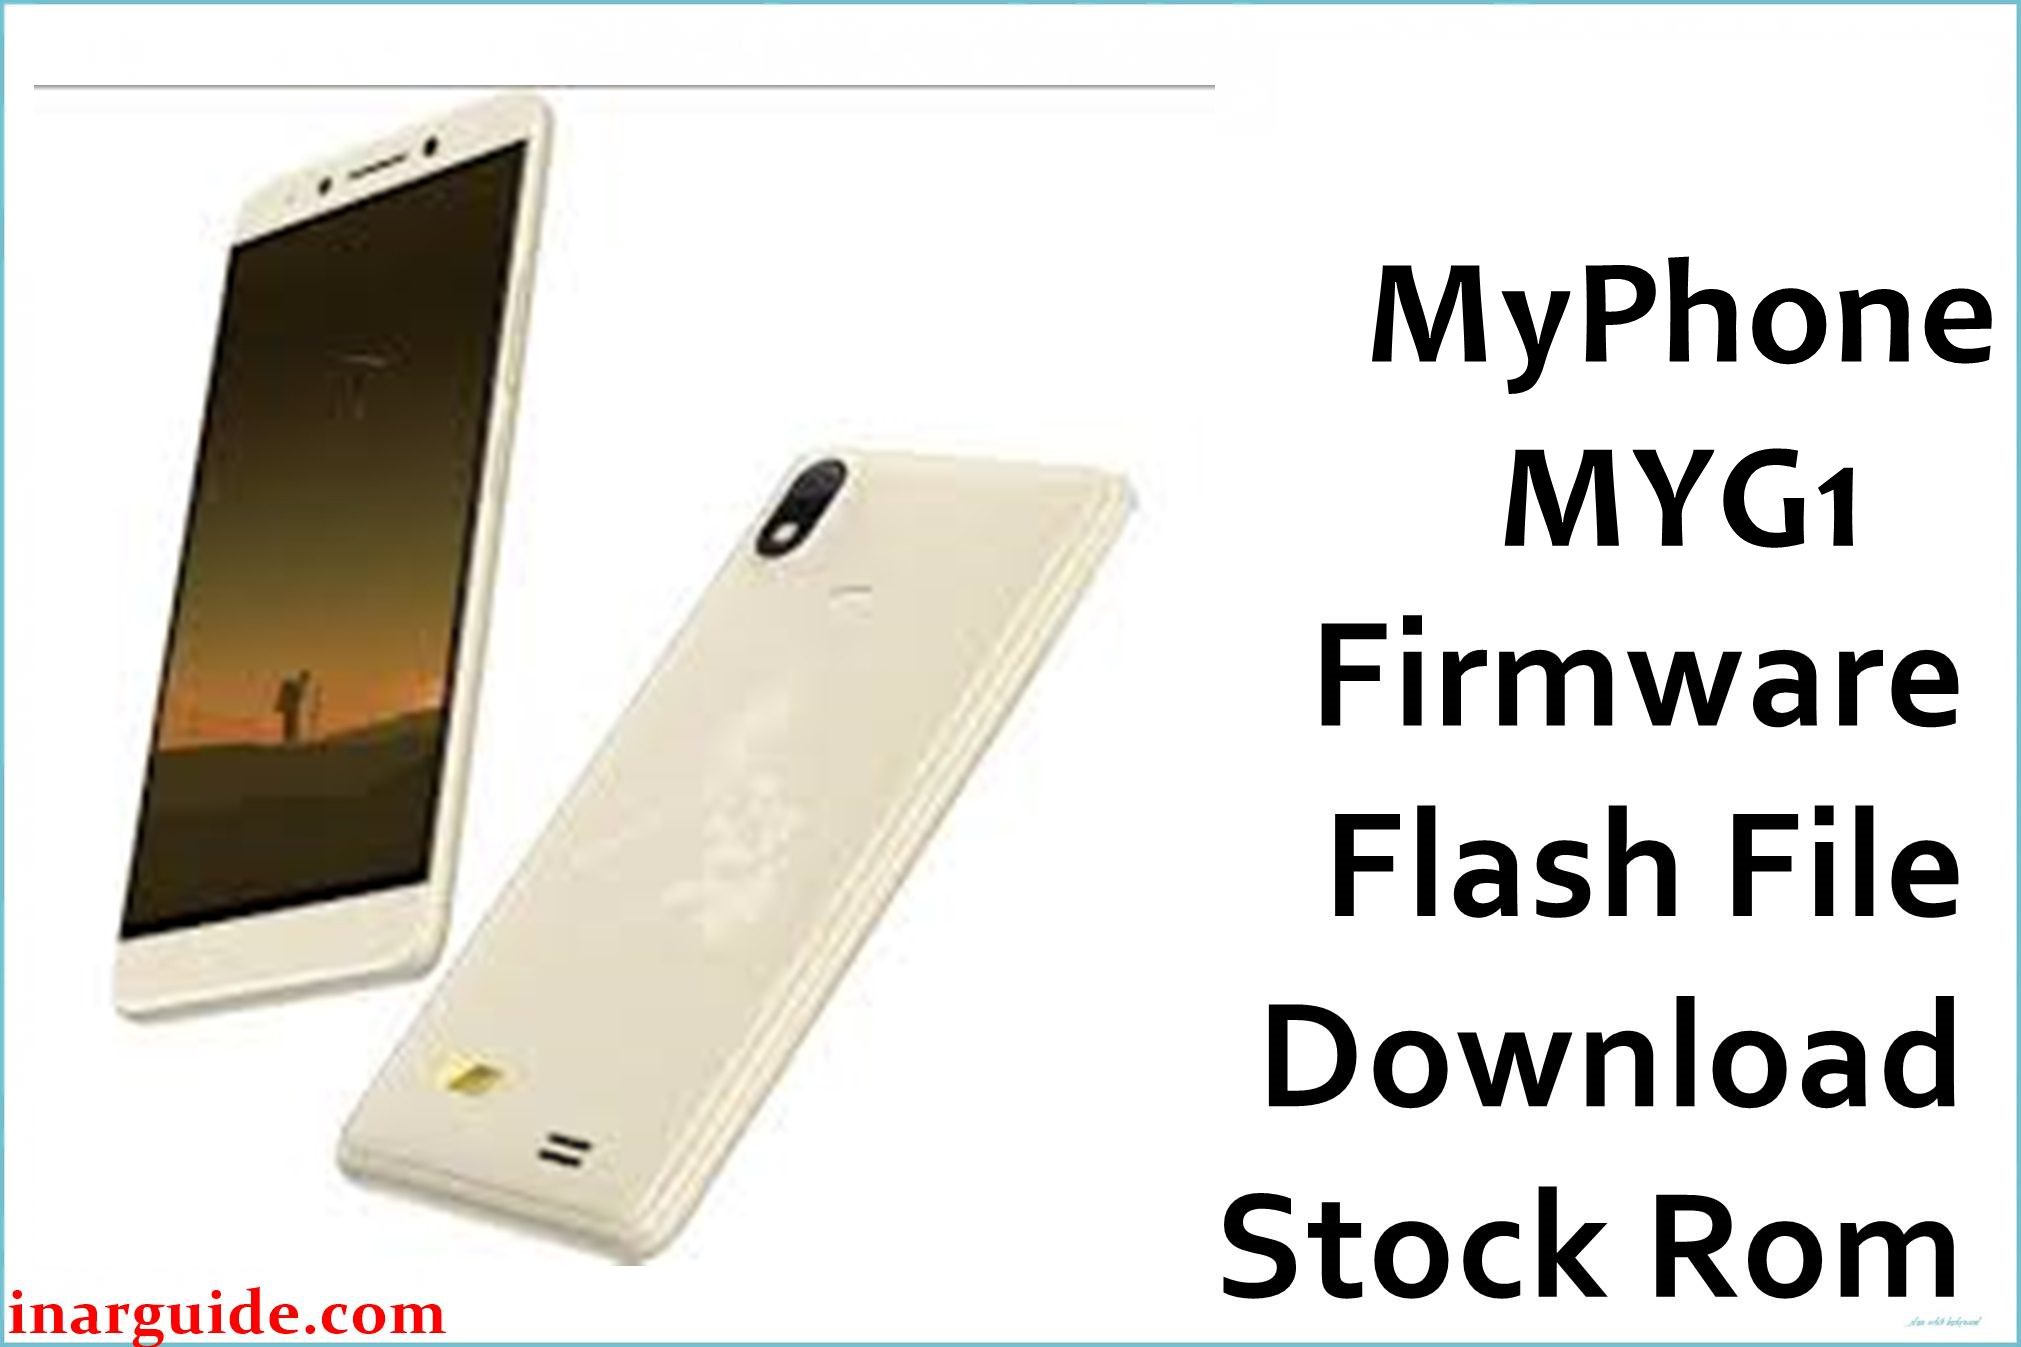 MyPhone MYG1